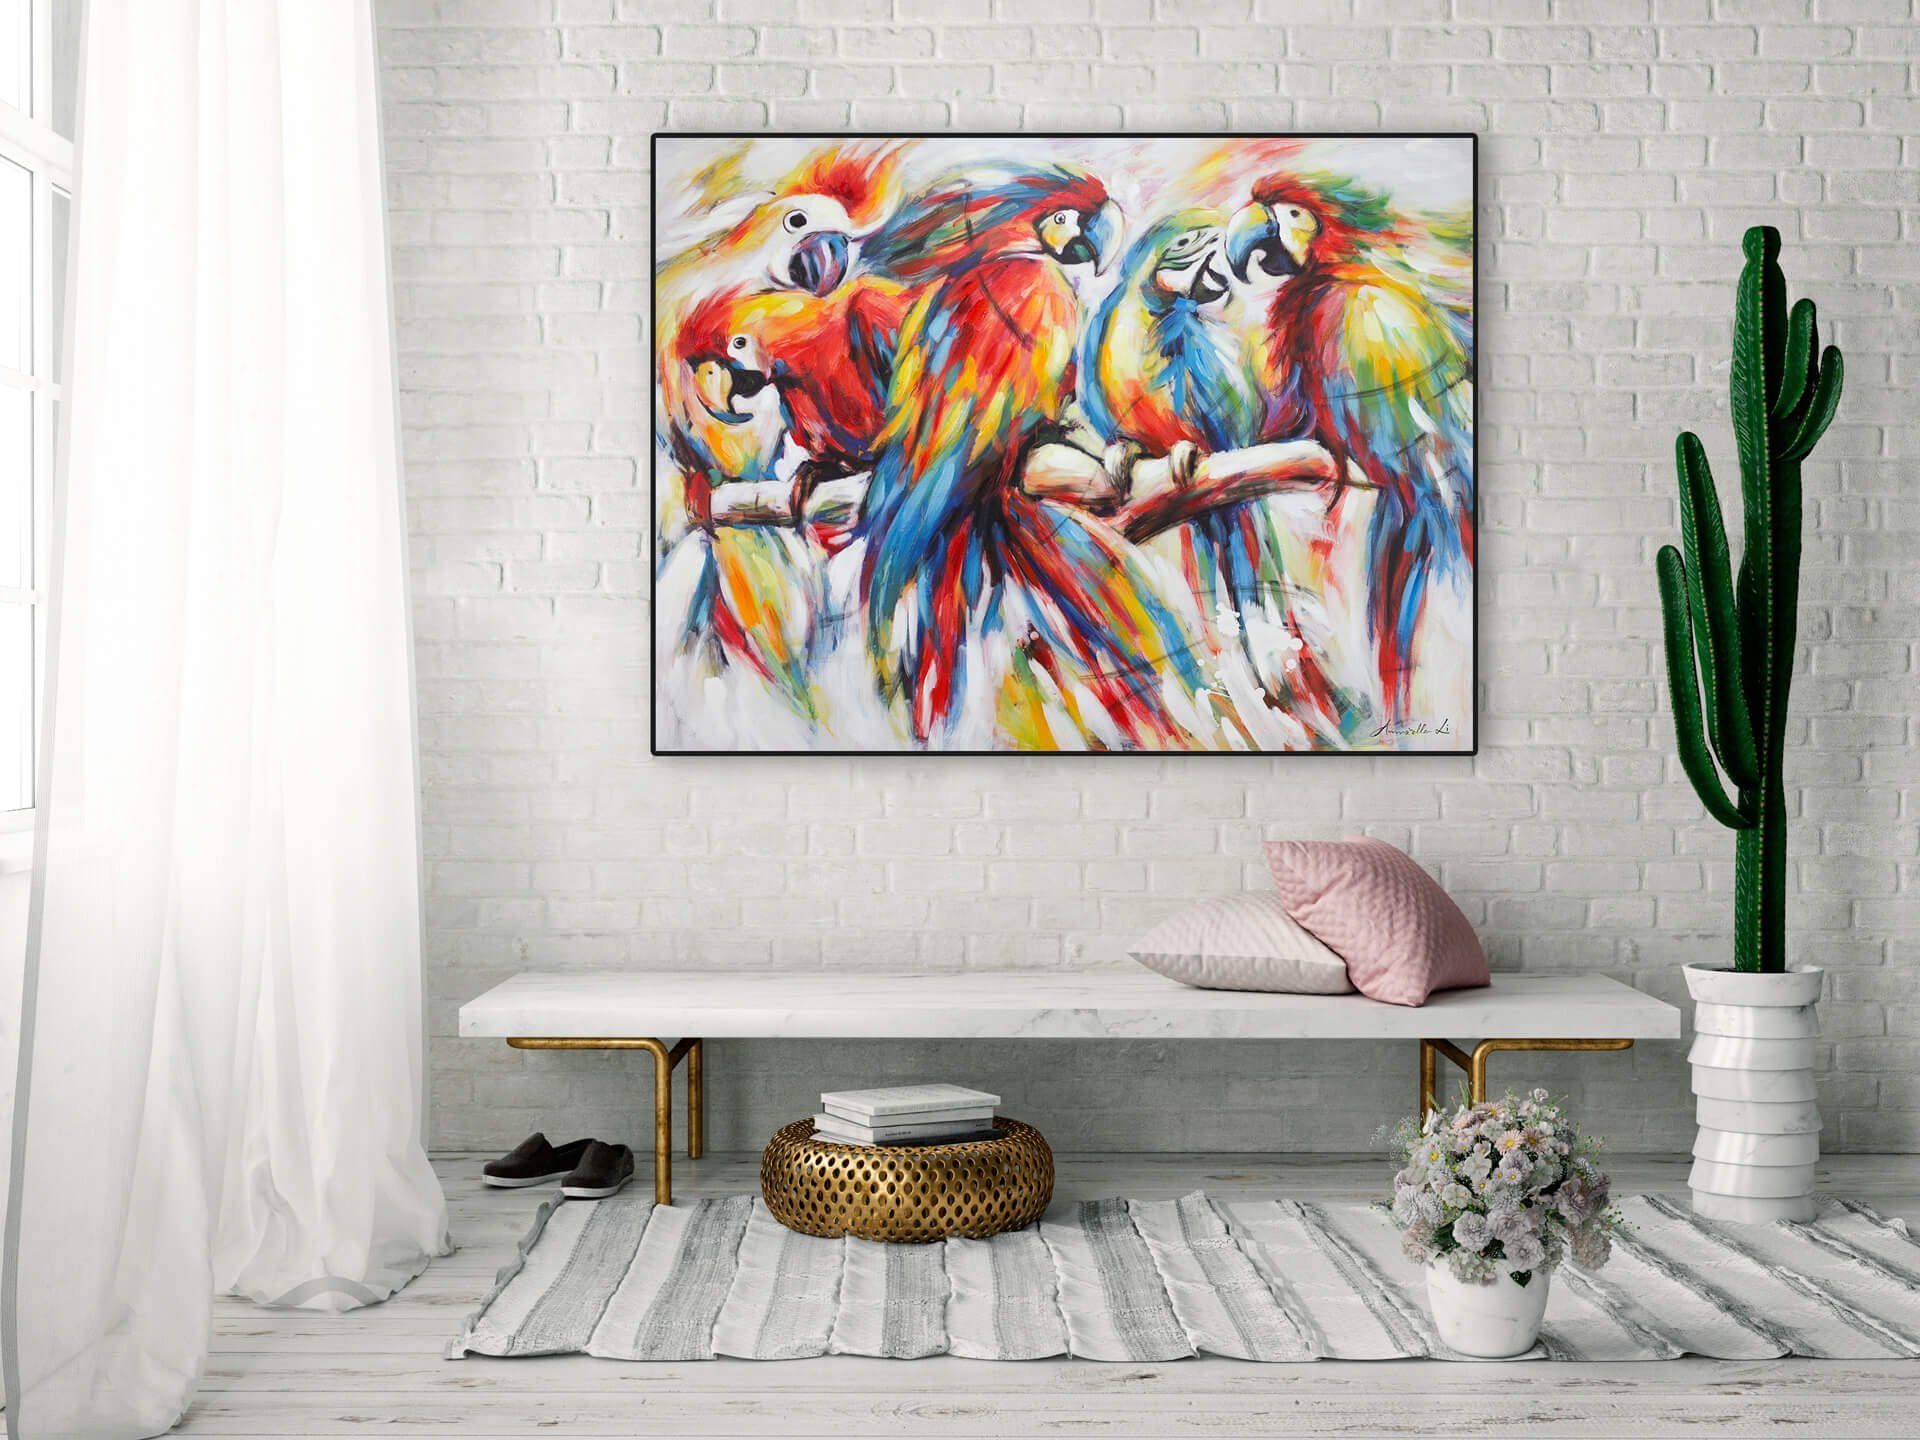 Wohnzimmer cm, Wandbild Gemälde Parrots 100% Love 120x90 HANDGEMALT Leinwandbild in KUNSTLOFT